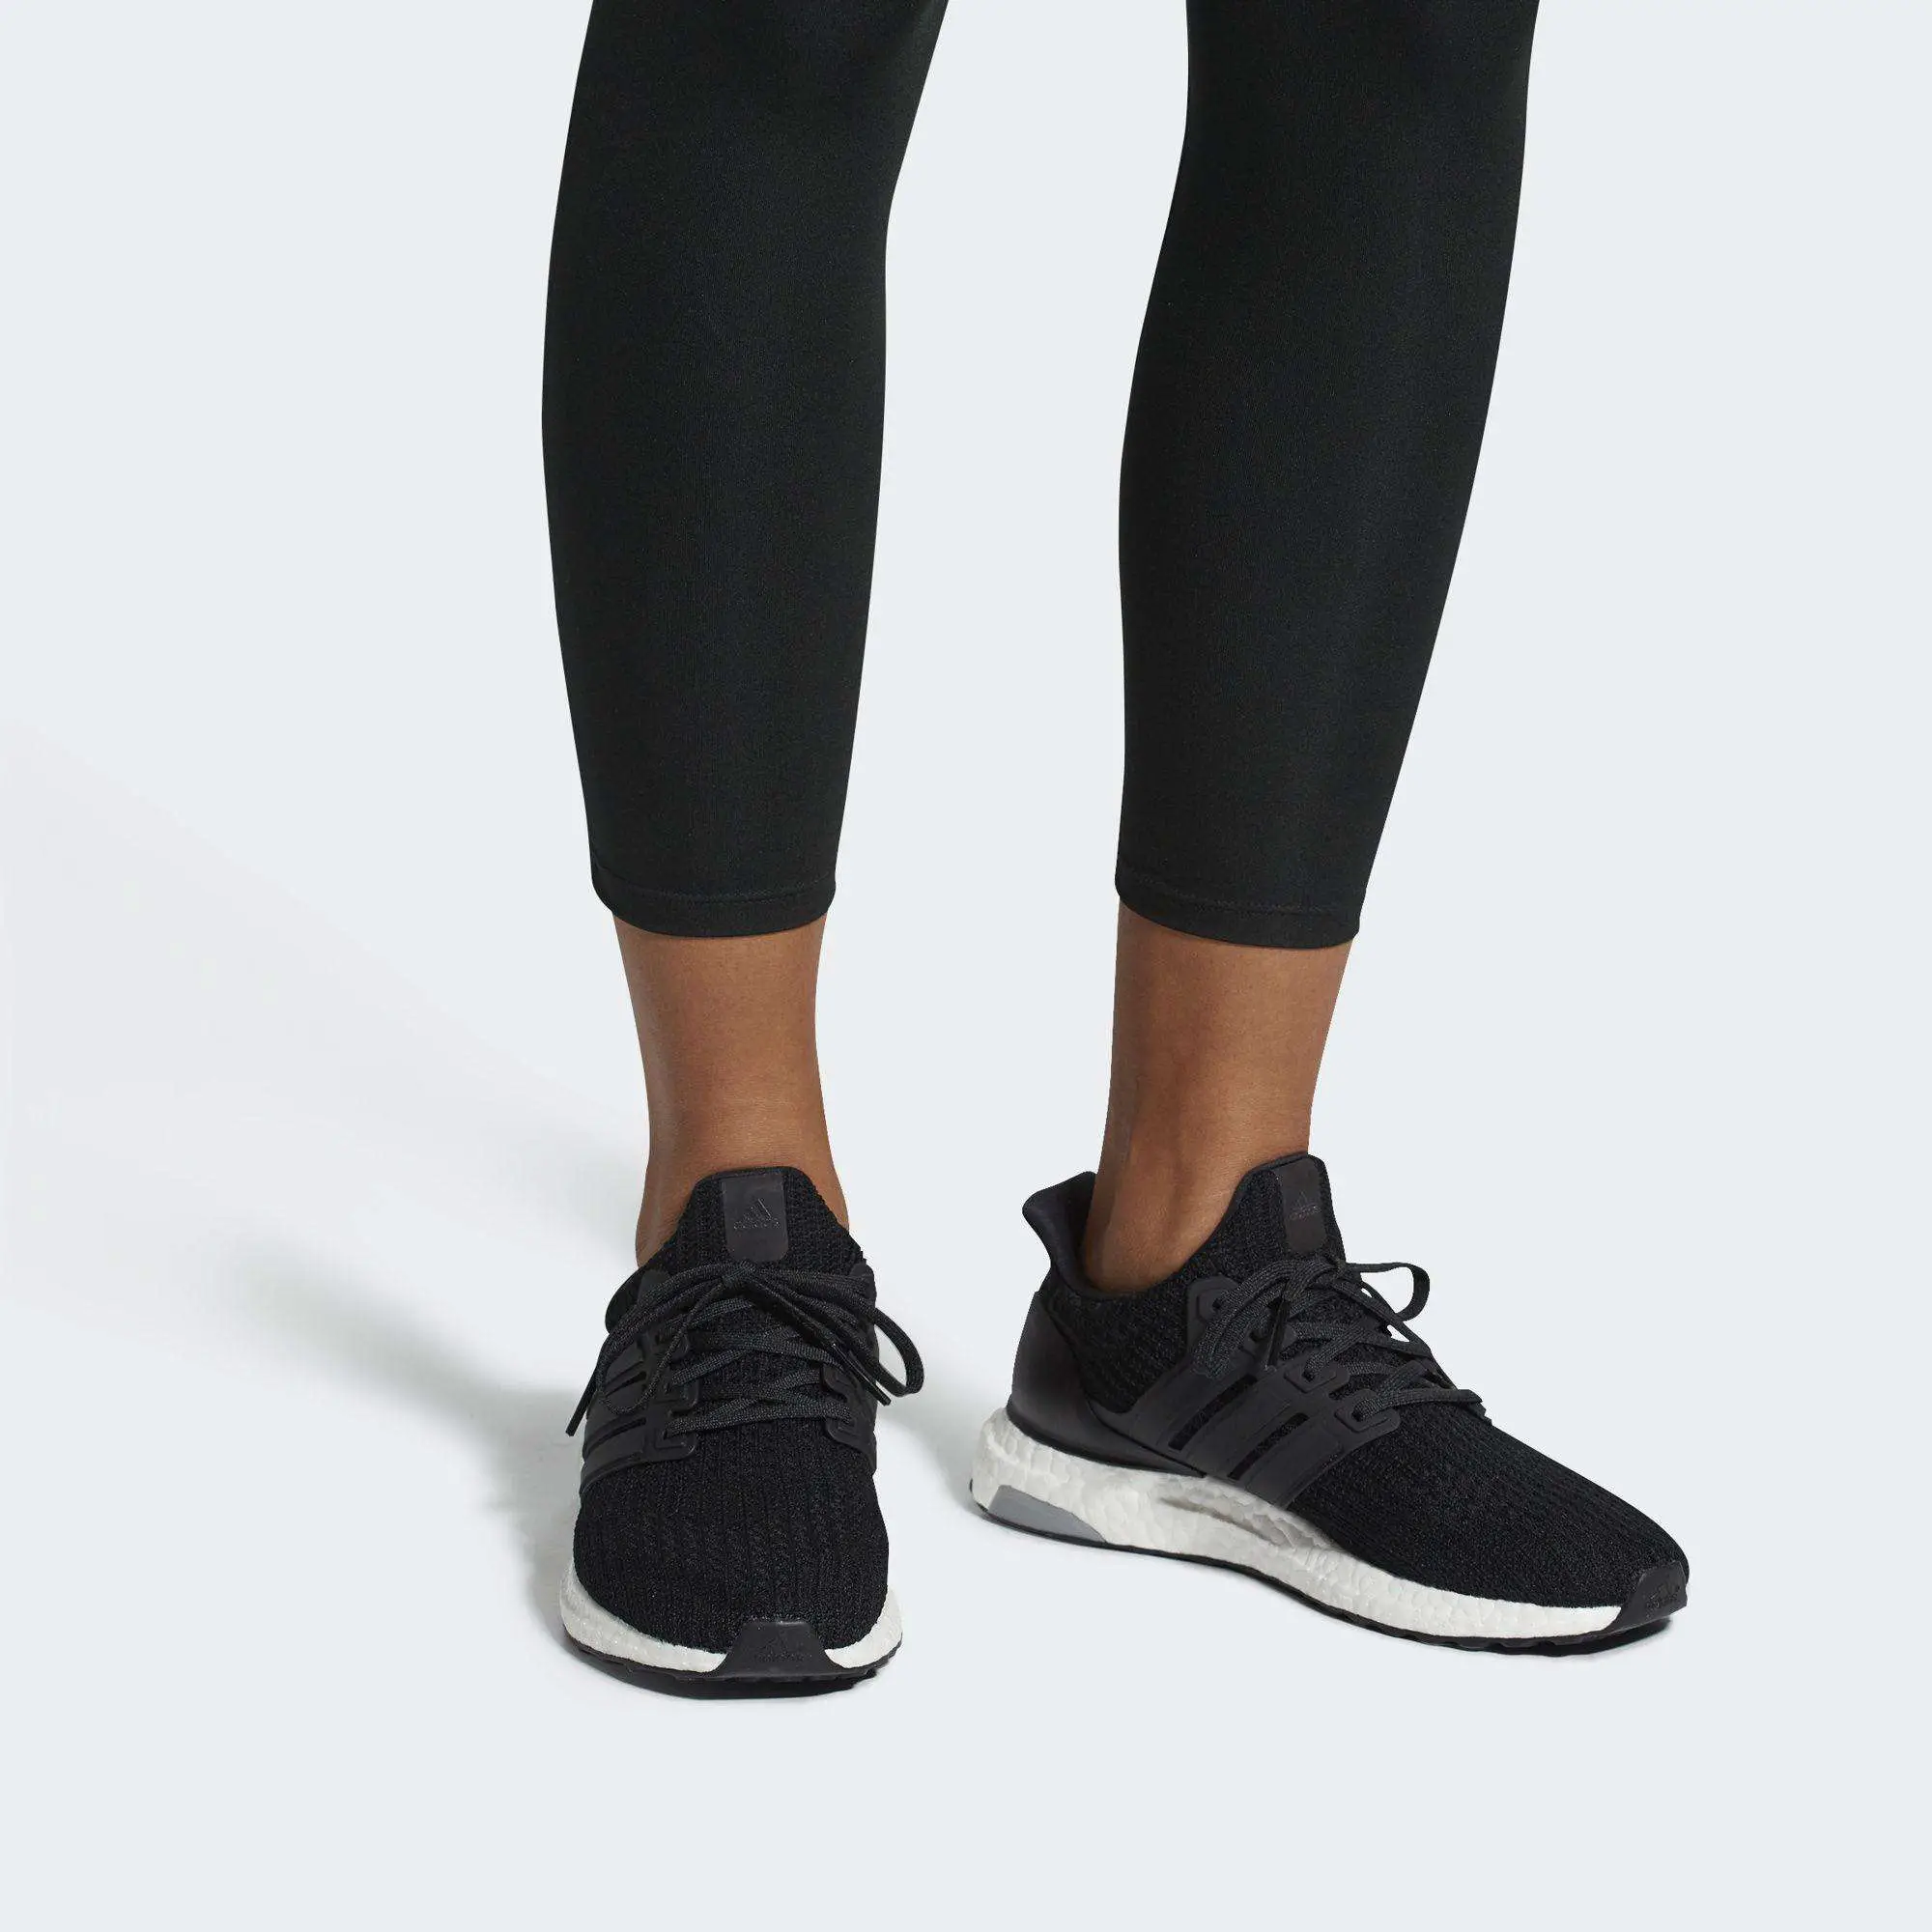 Adidas Womens Ultra Boost Running Shoes